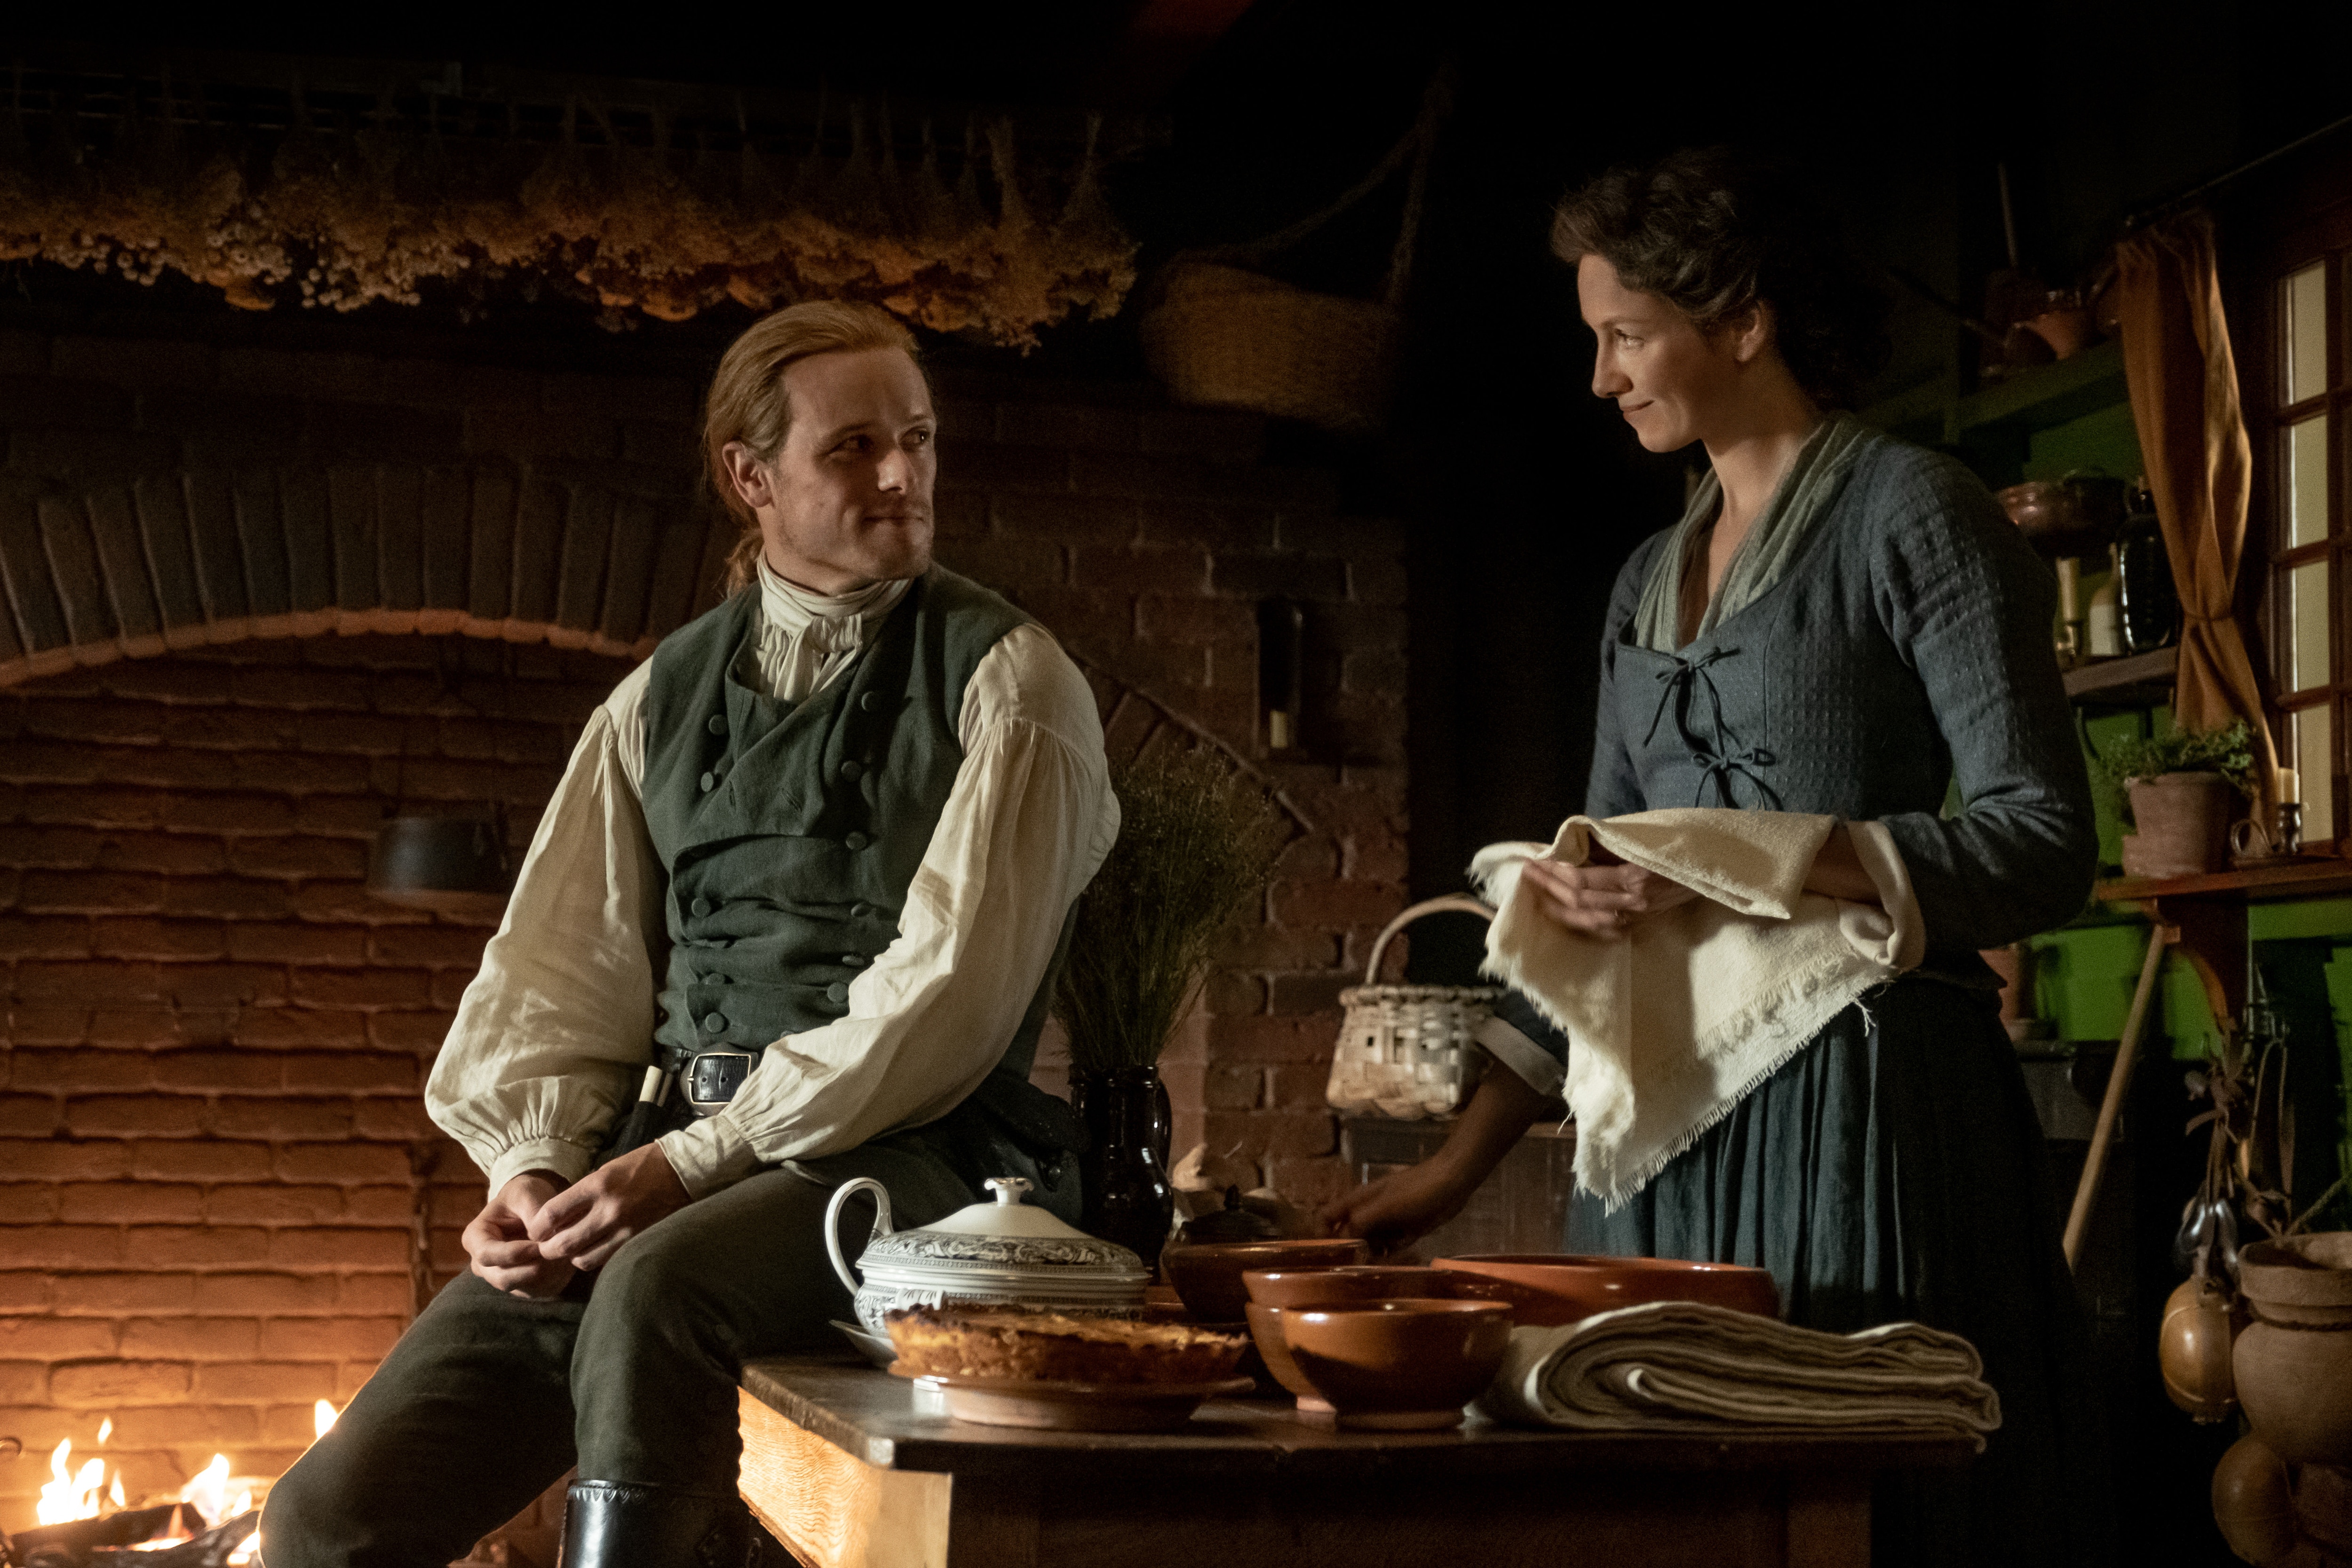 Outlander's Caitriona Balfe and Sam Heughan reveal quarantine cocktails, set steals & favorite Season 5 scenes